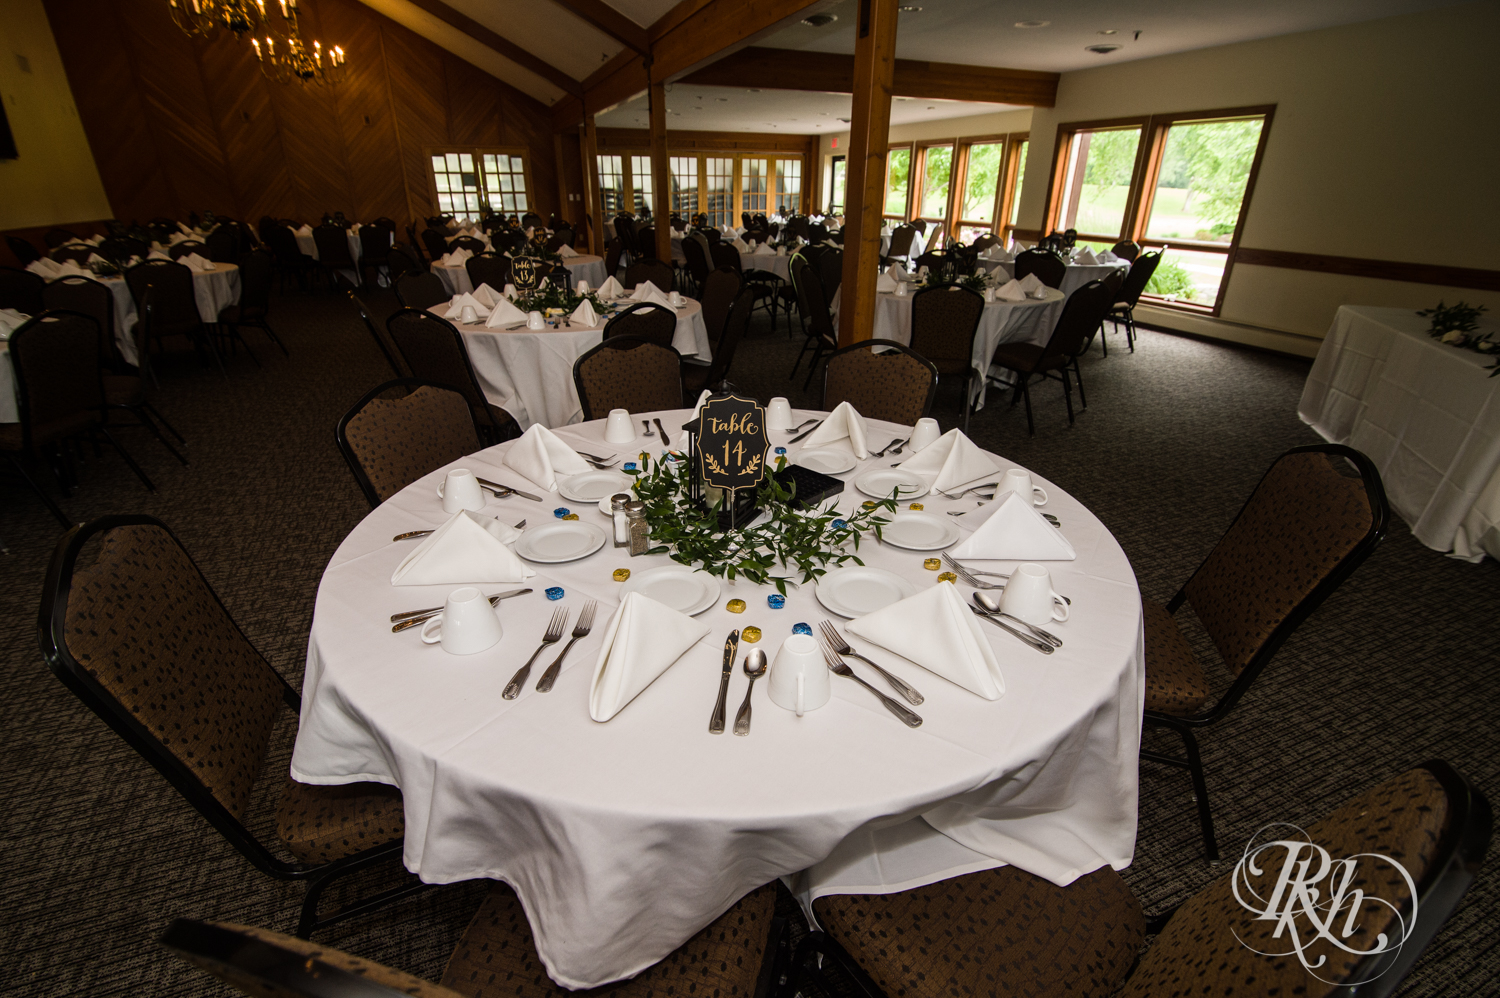 Indoor wedding reception setup at Oak Glen Golf Course in Stillwater, Minnesota.